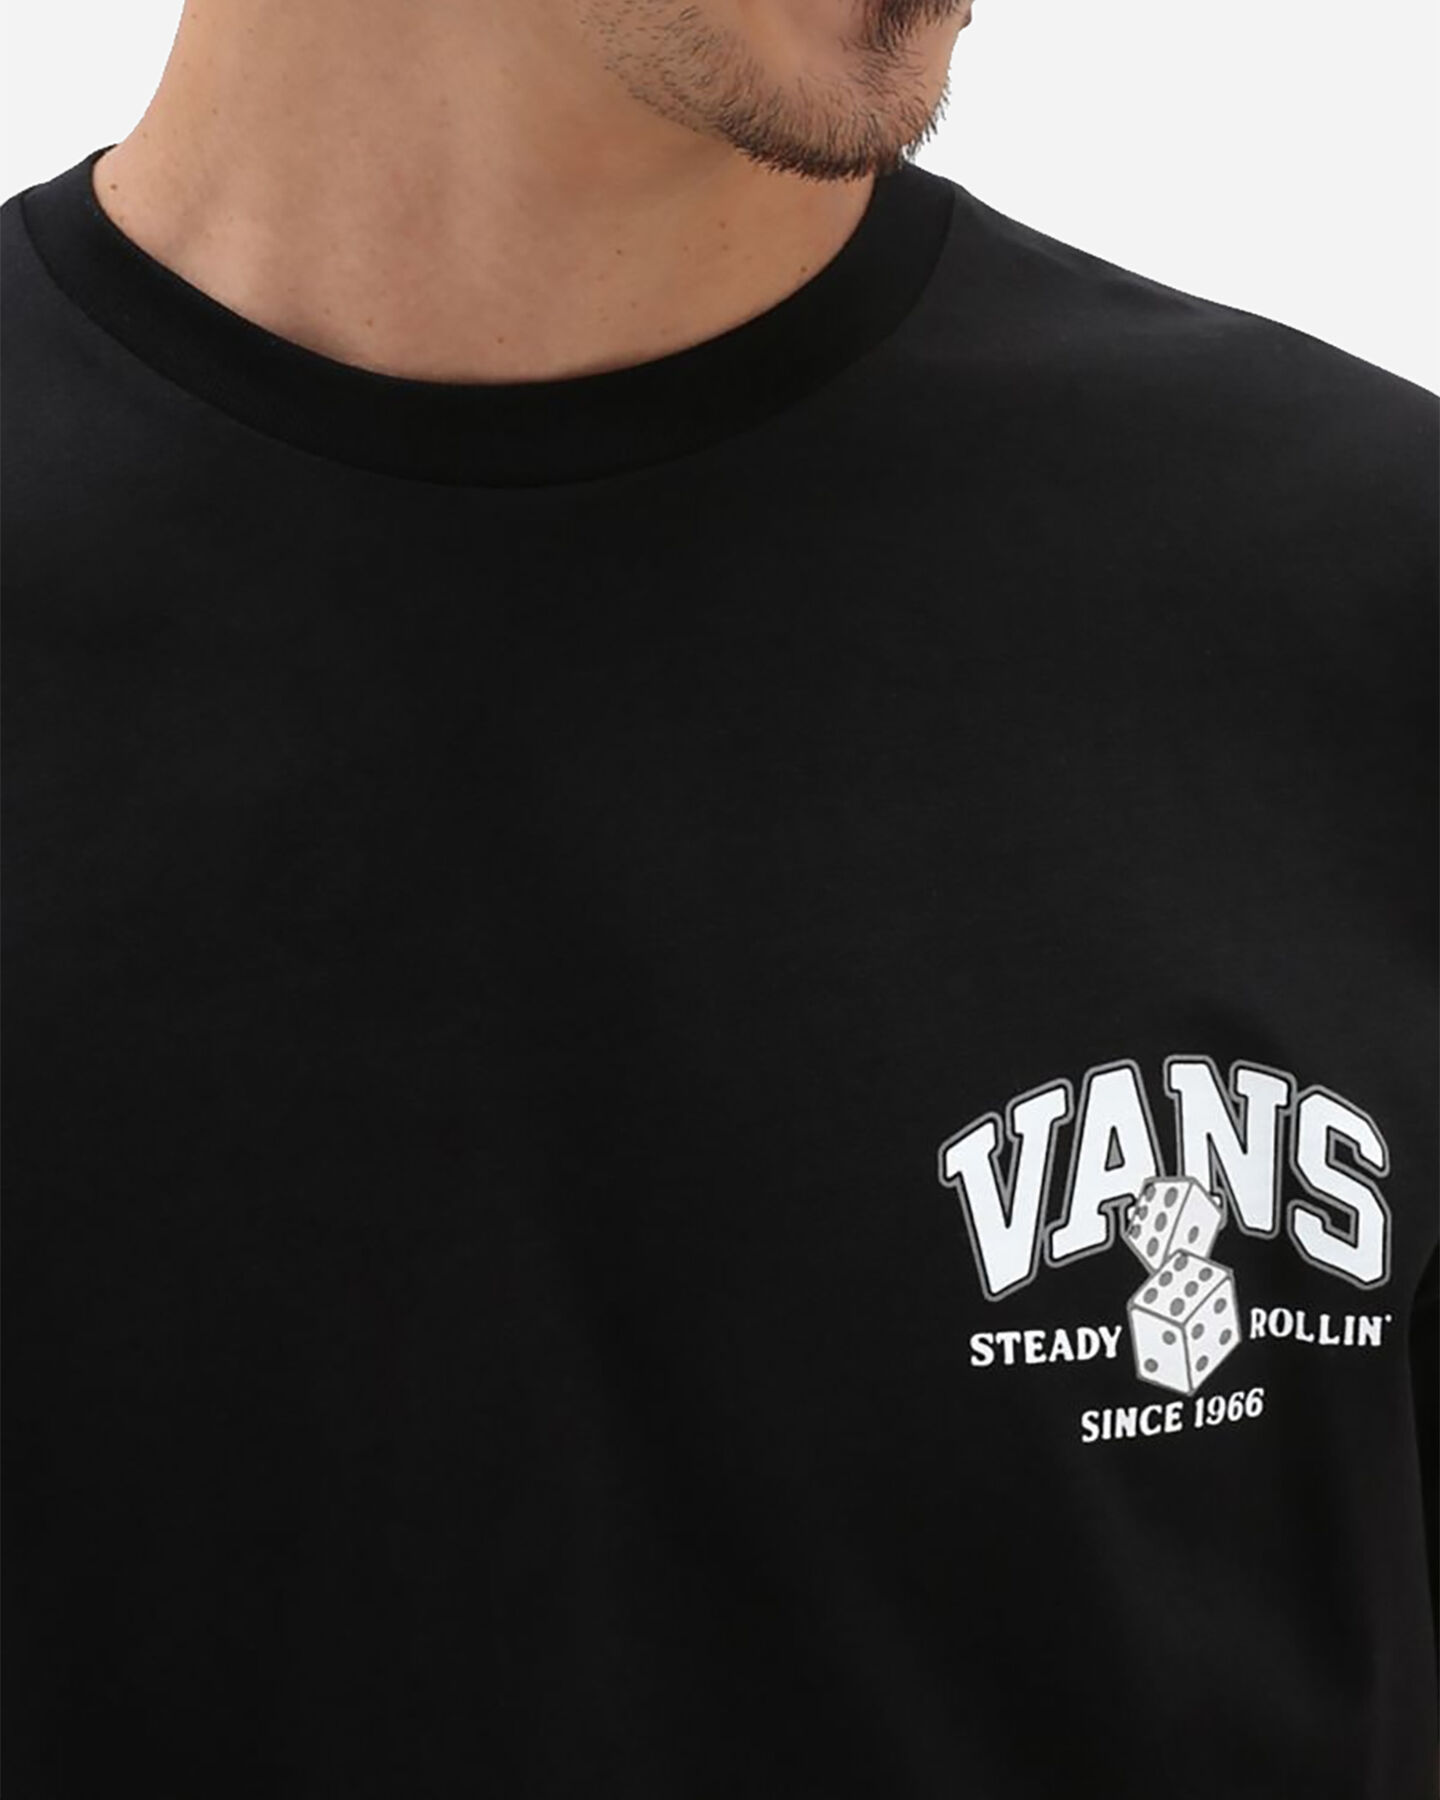  T-Shirt VANS STEADY ROLLIN M S5555257|BLK|XS scatto 3